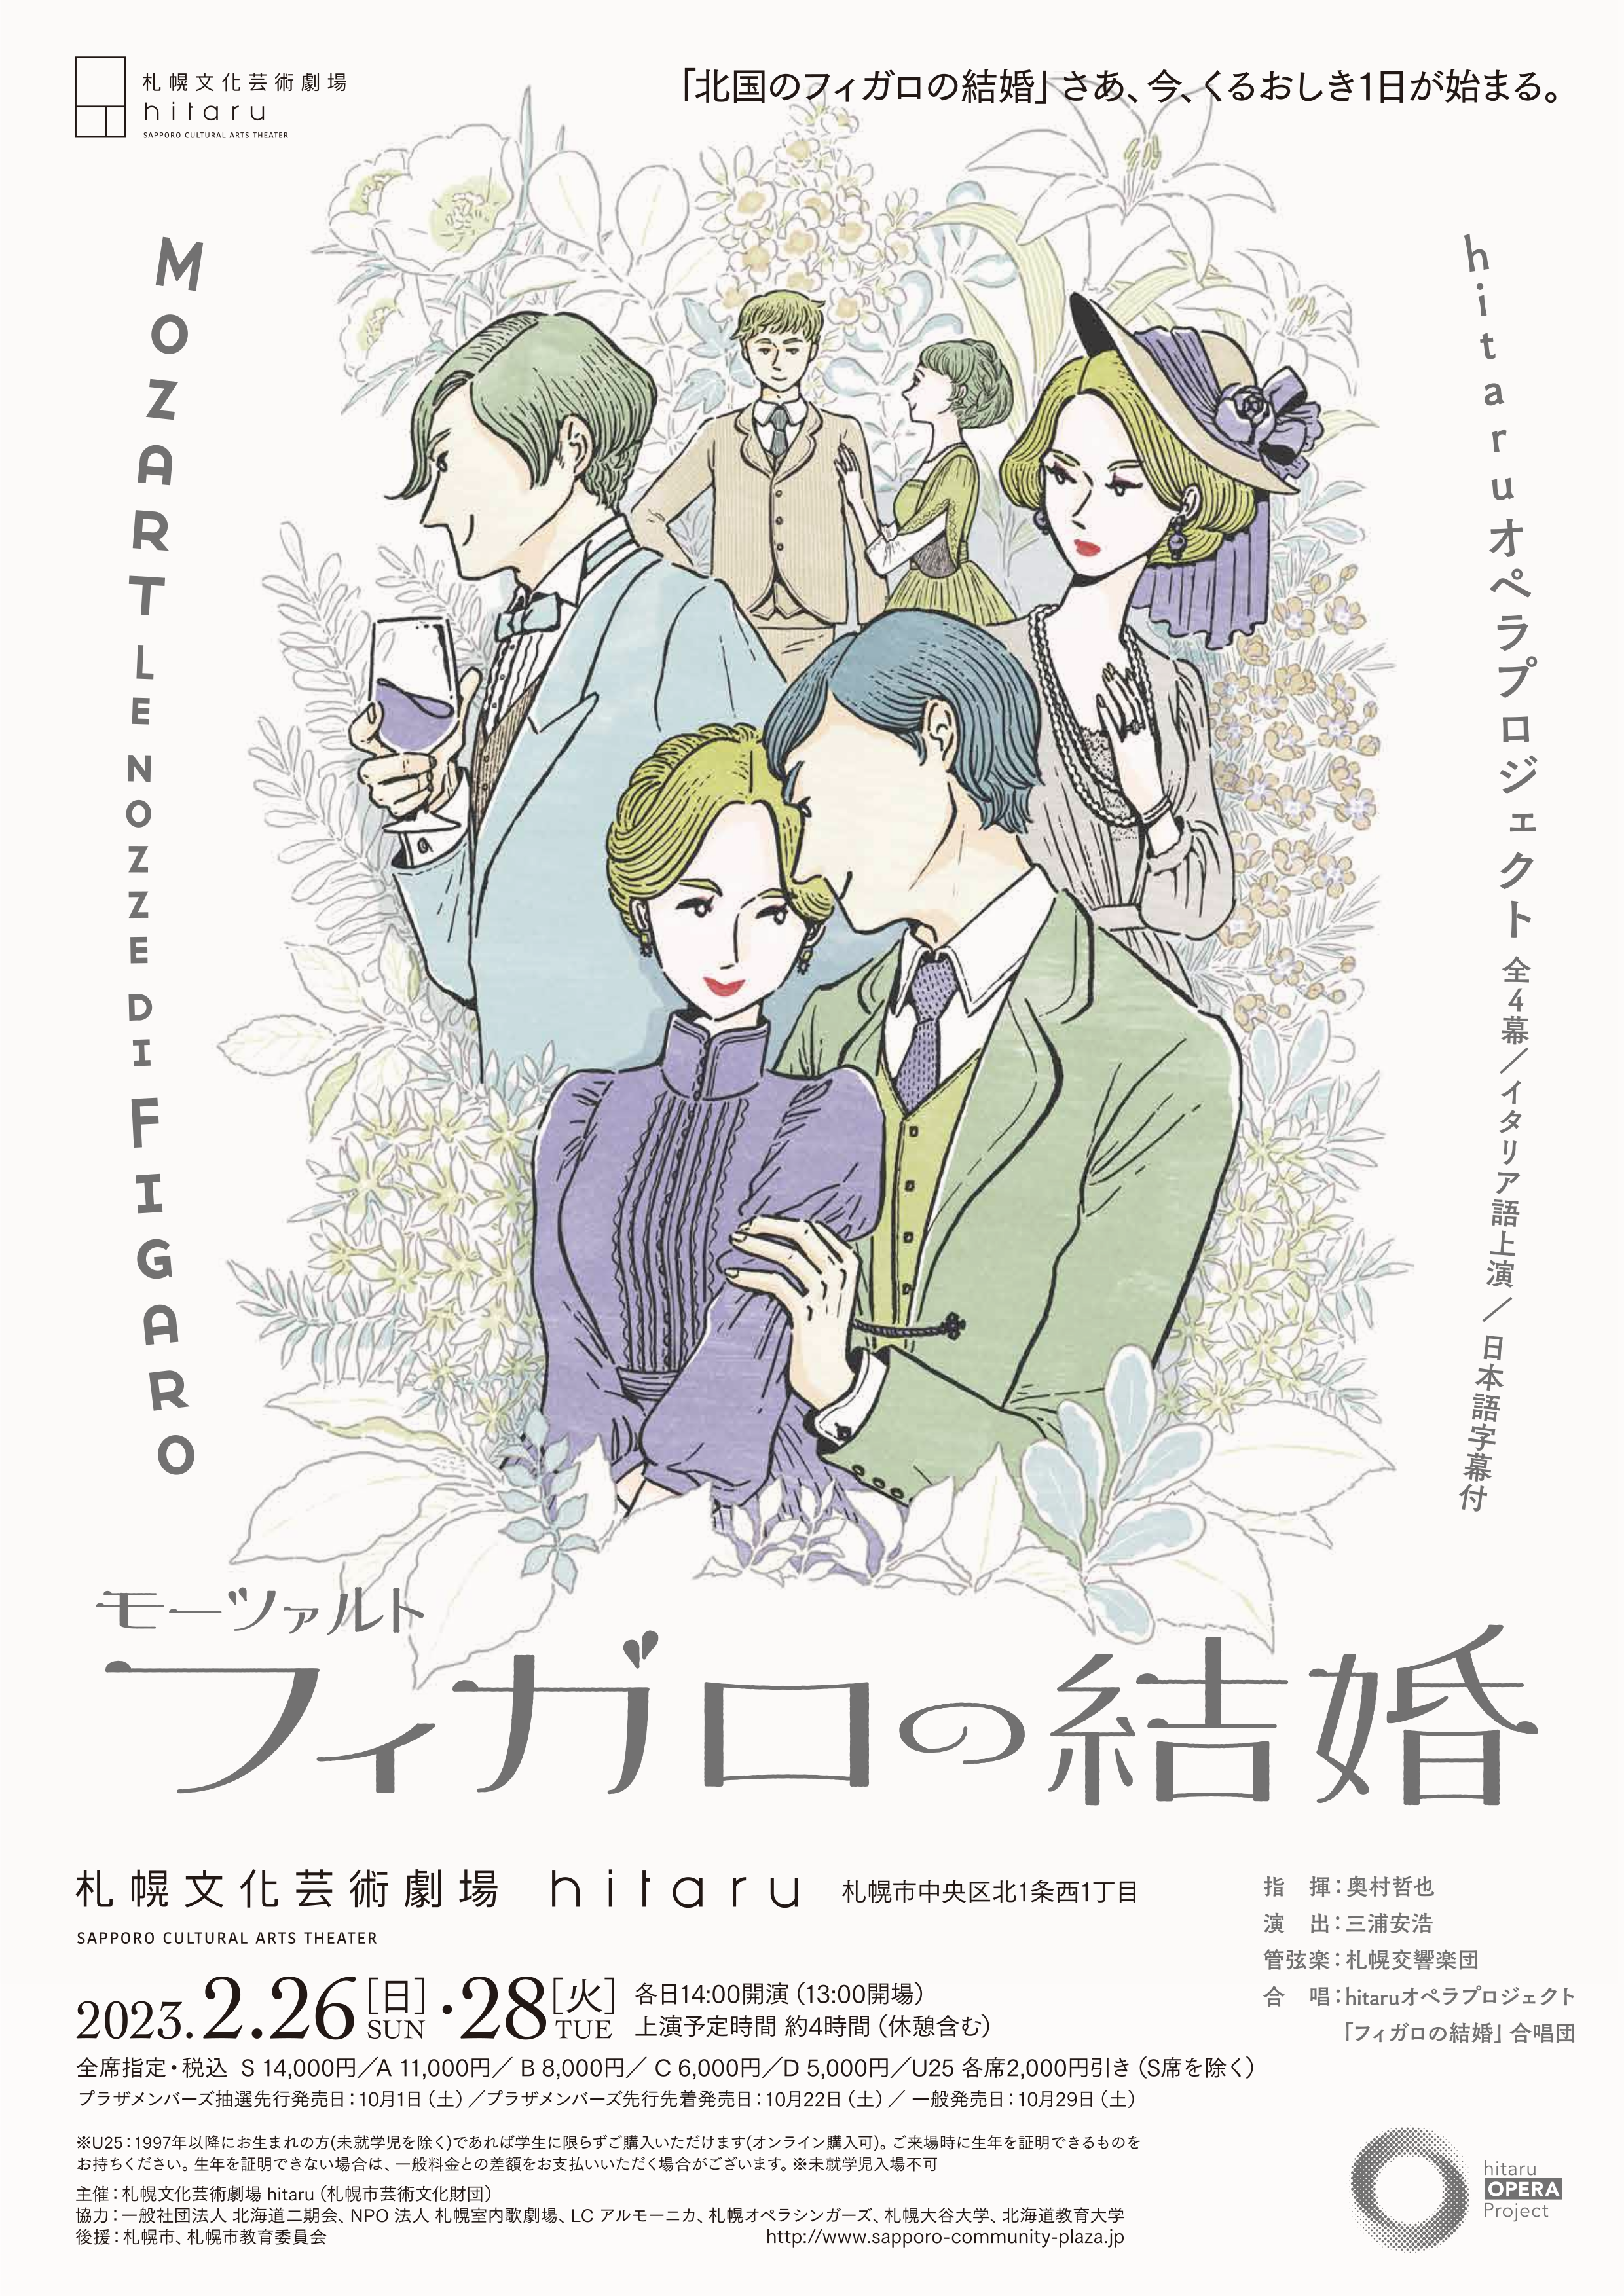 hitaruオペラプロジェクト モーツァルト「フィガロの結婚」 (全4幕・イタリア語上演、日本語字幕付)のイメージ1枚目